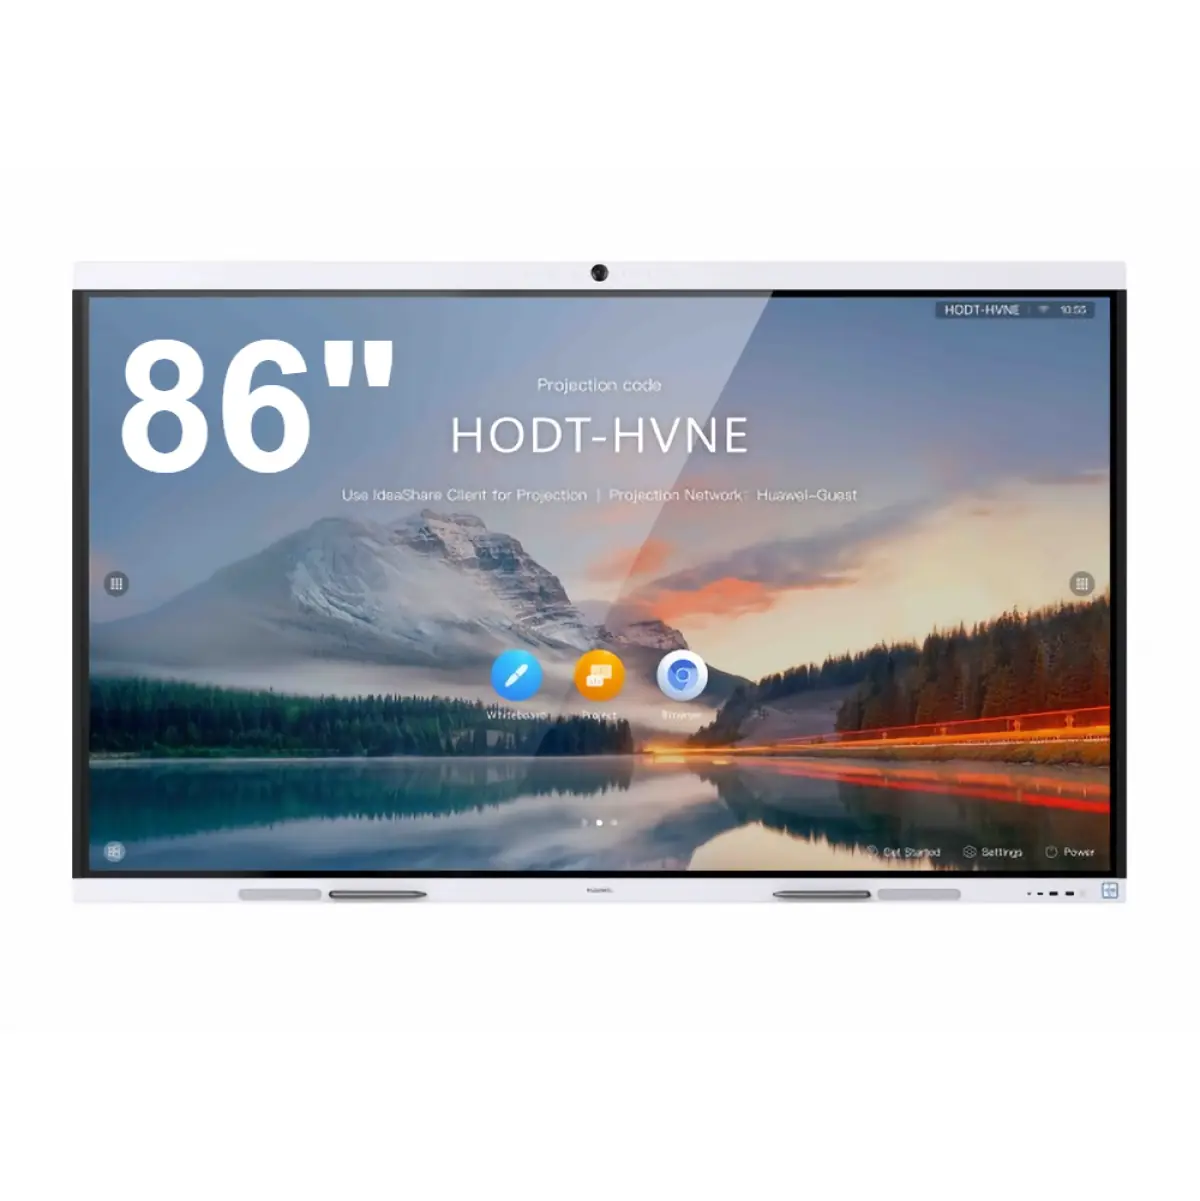 IdeaHub B2 86 : le tableau blanc interactif selon Huawei